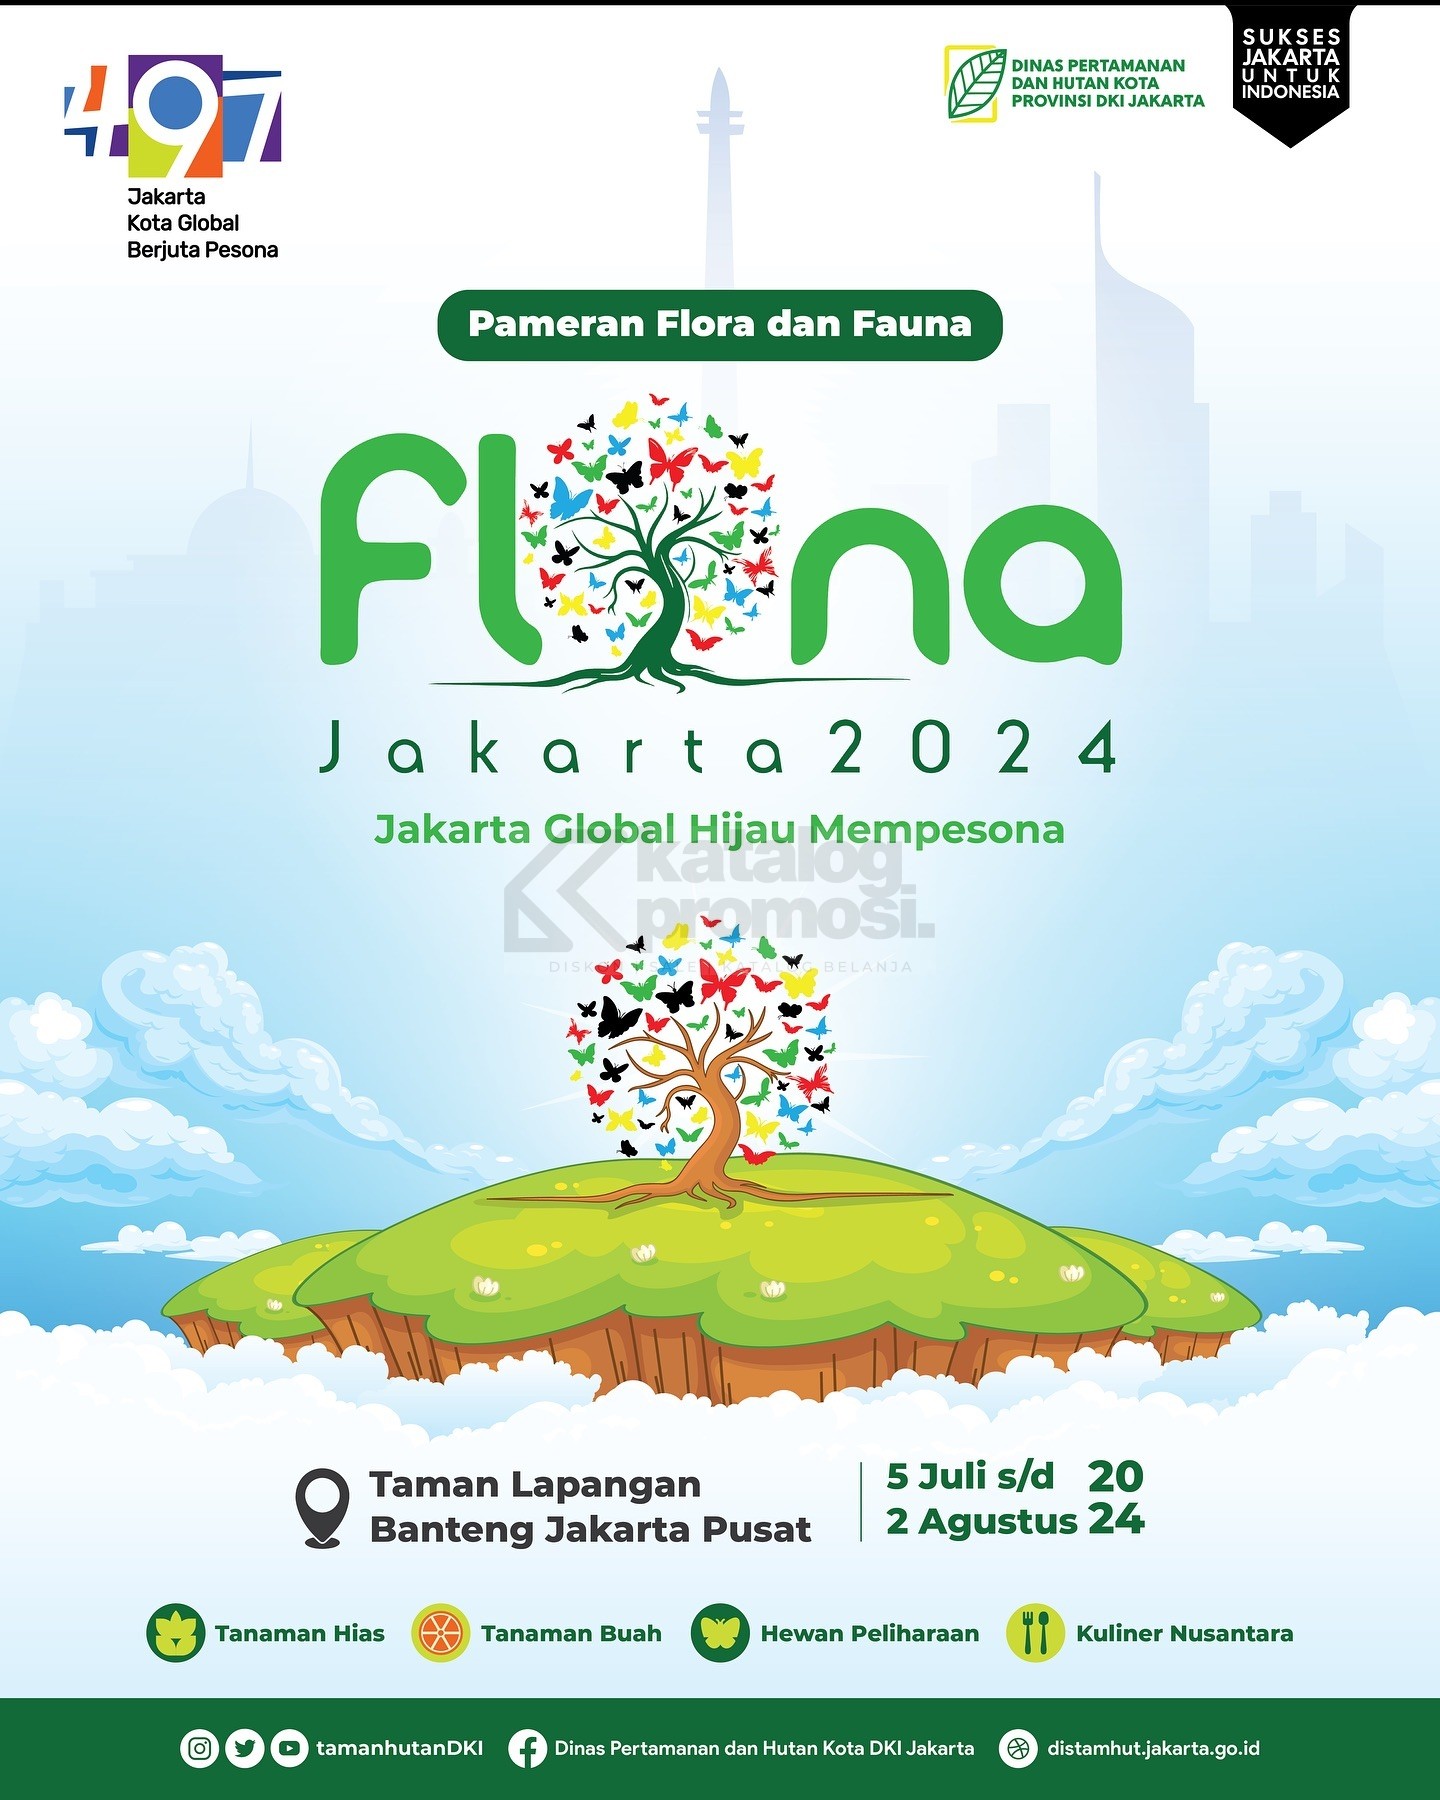 Flona 2024 - Pameran Flora dan Fauna Jakarta mulai tanggal 5 Juli - 2 Agustus 2024 di Taman Lapangan Banteng Jakarta Pusat